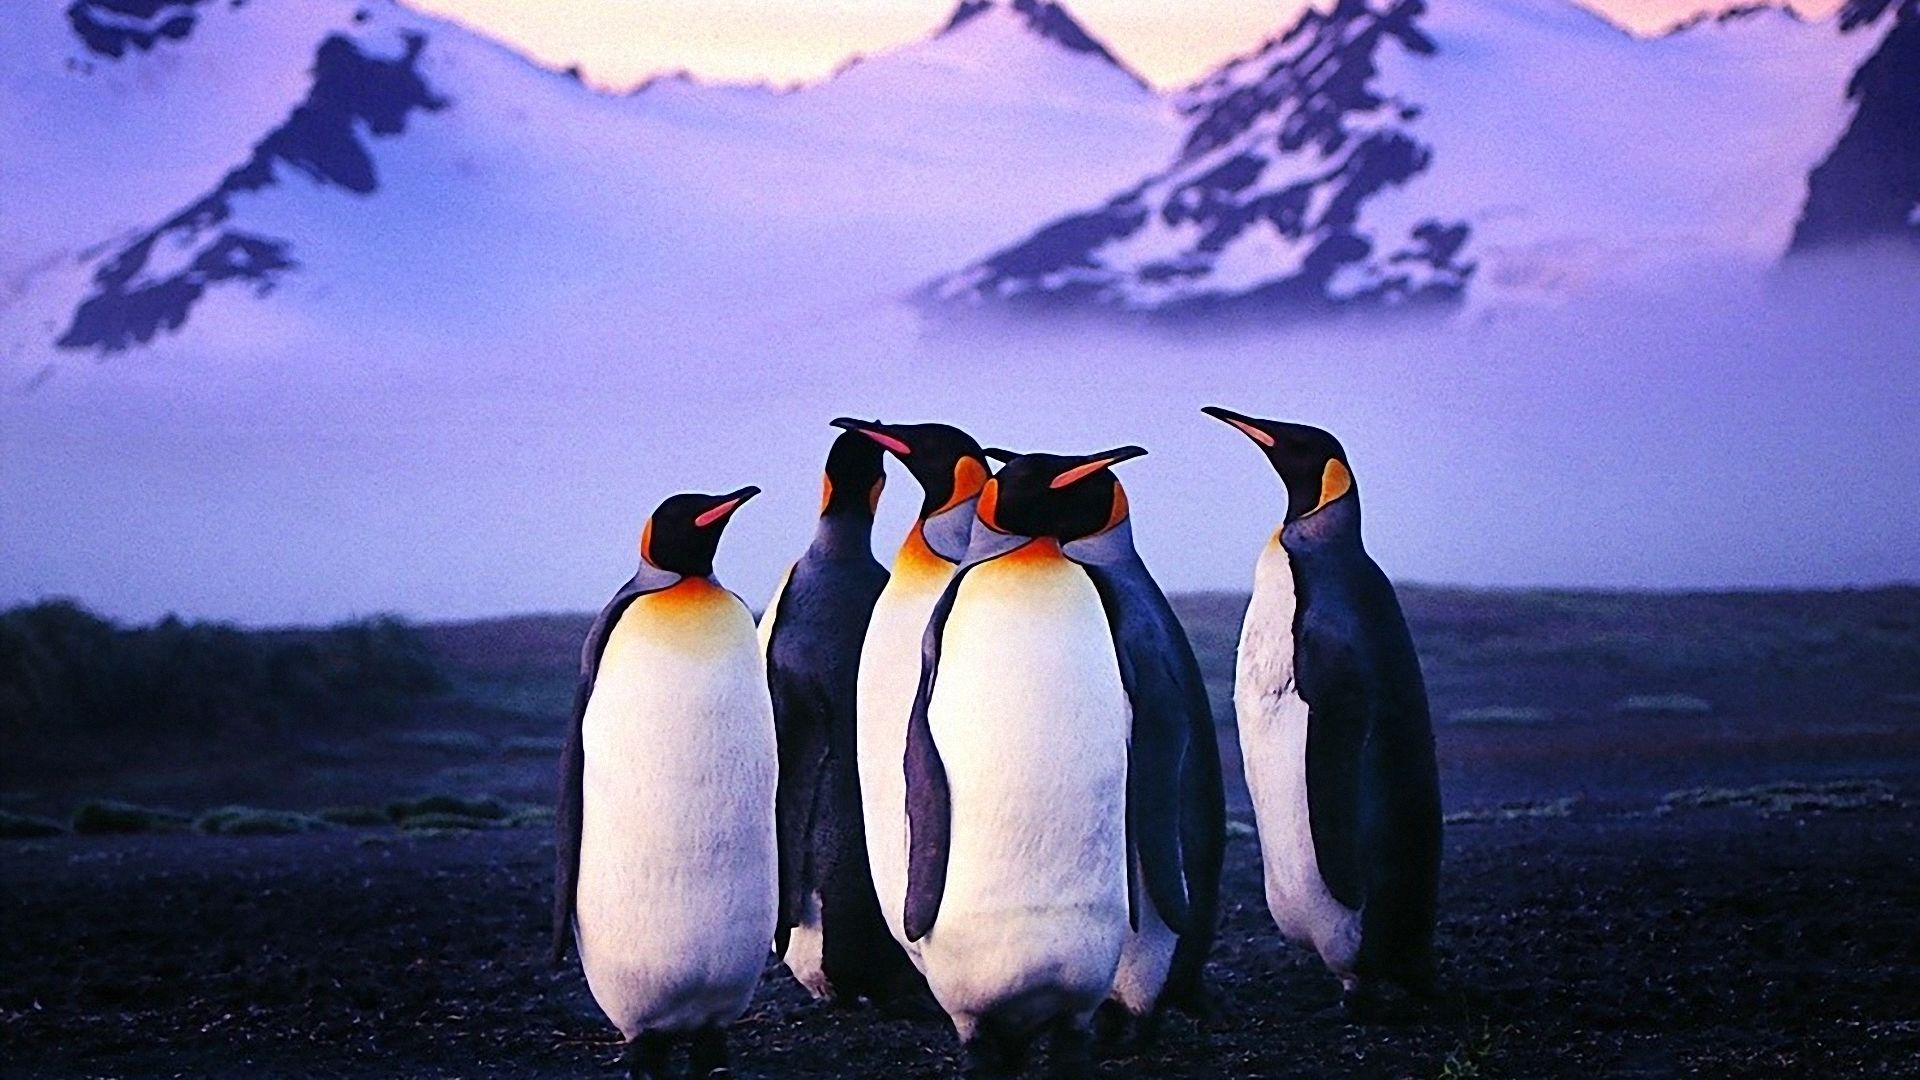 pinguin desktop hintergrund,pinguin,flugunfähiger vogel,königspinguin,vogel,kaiserpinguin